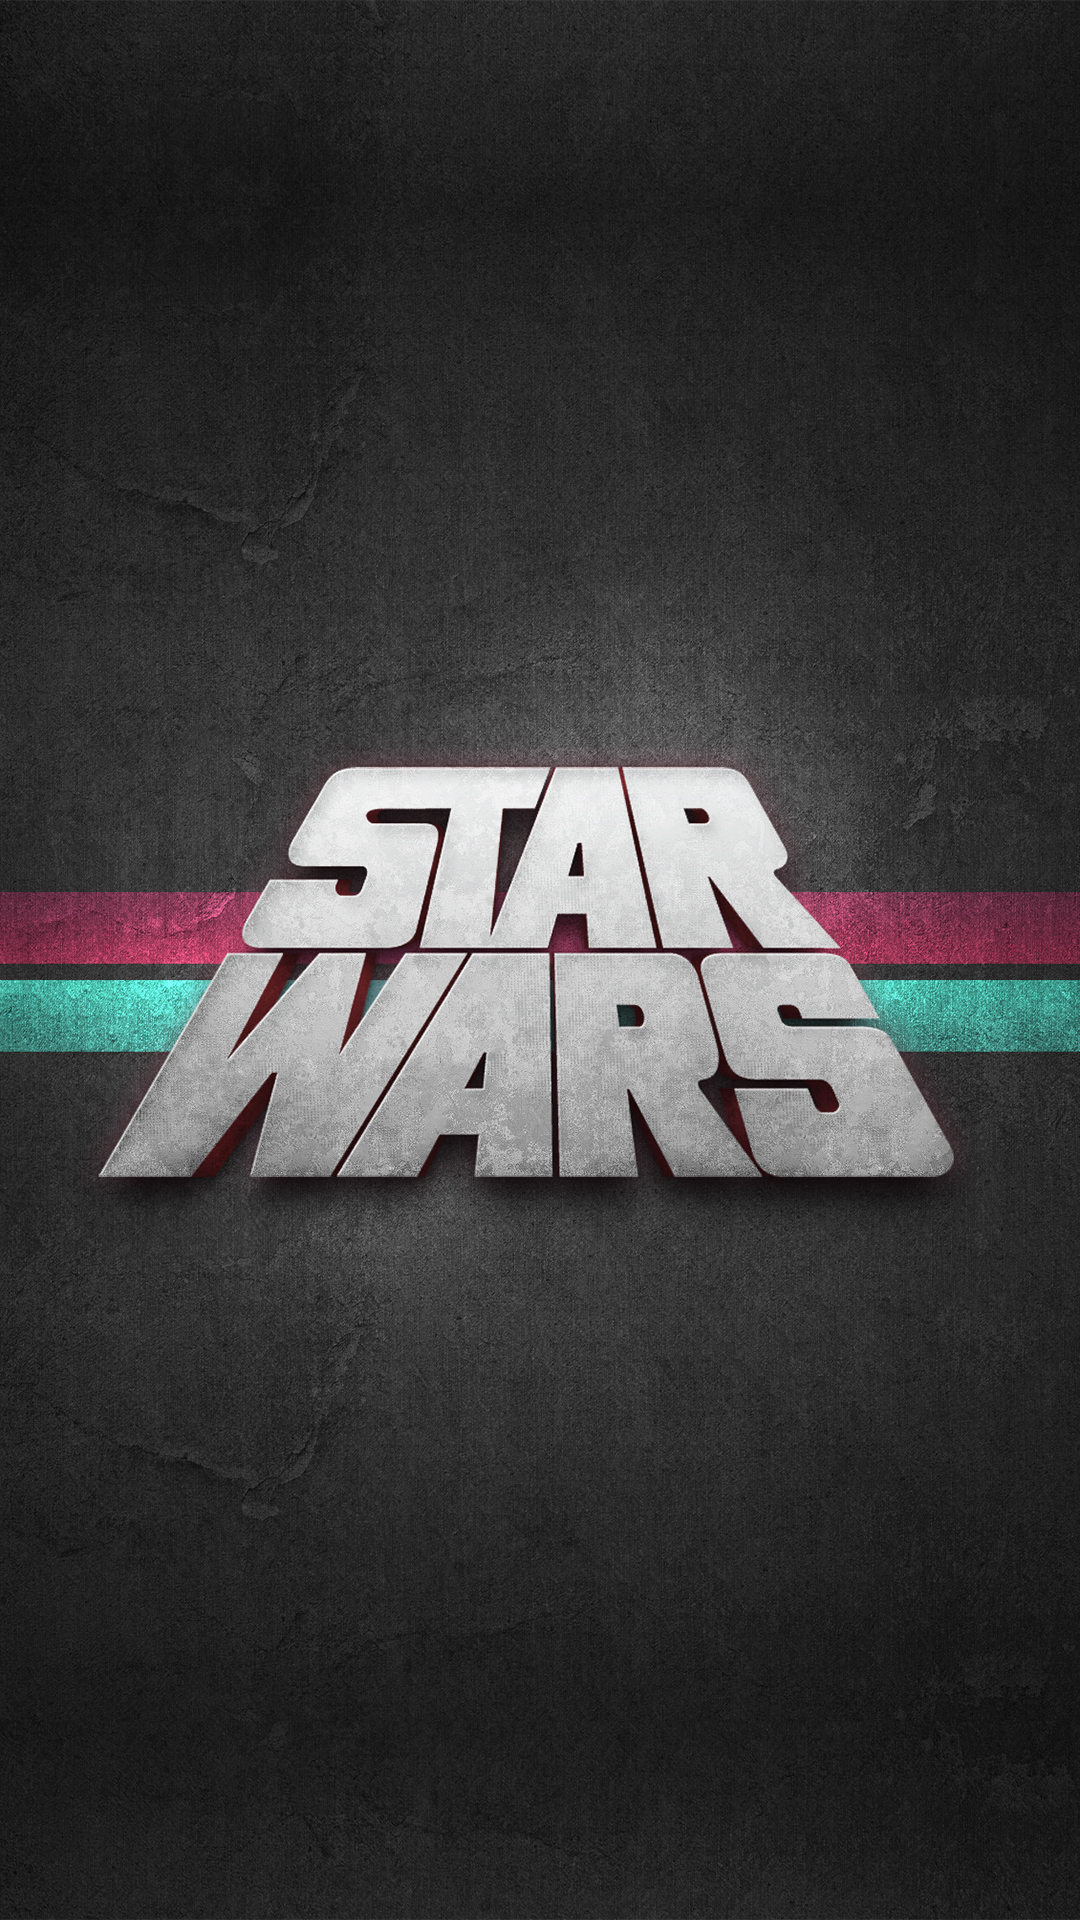 Star wars android wallpaper